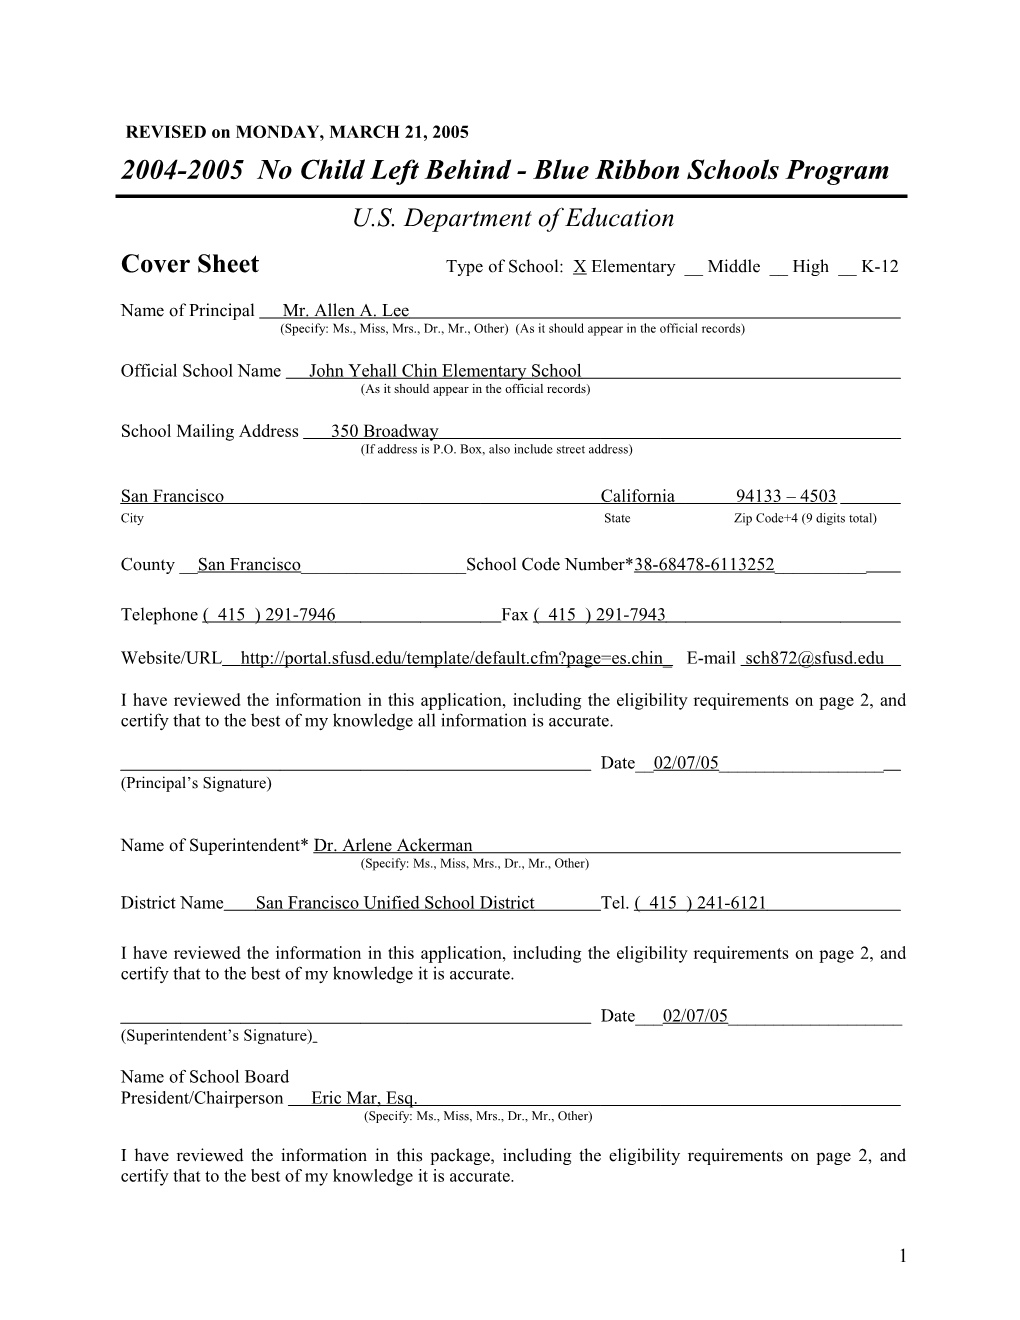 John Yehall Chin Elementary School Application: 2004-2005, No Child Left Behind - Blue